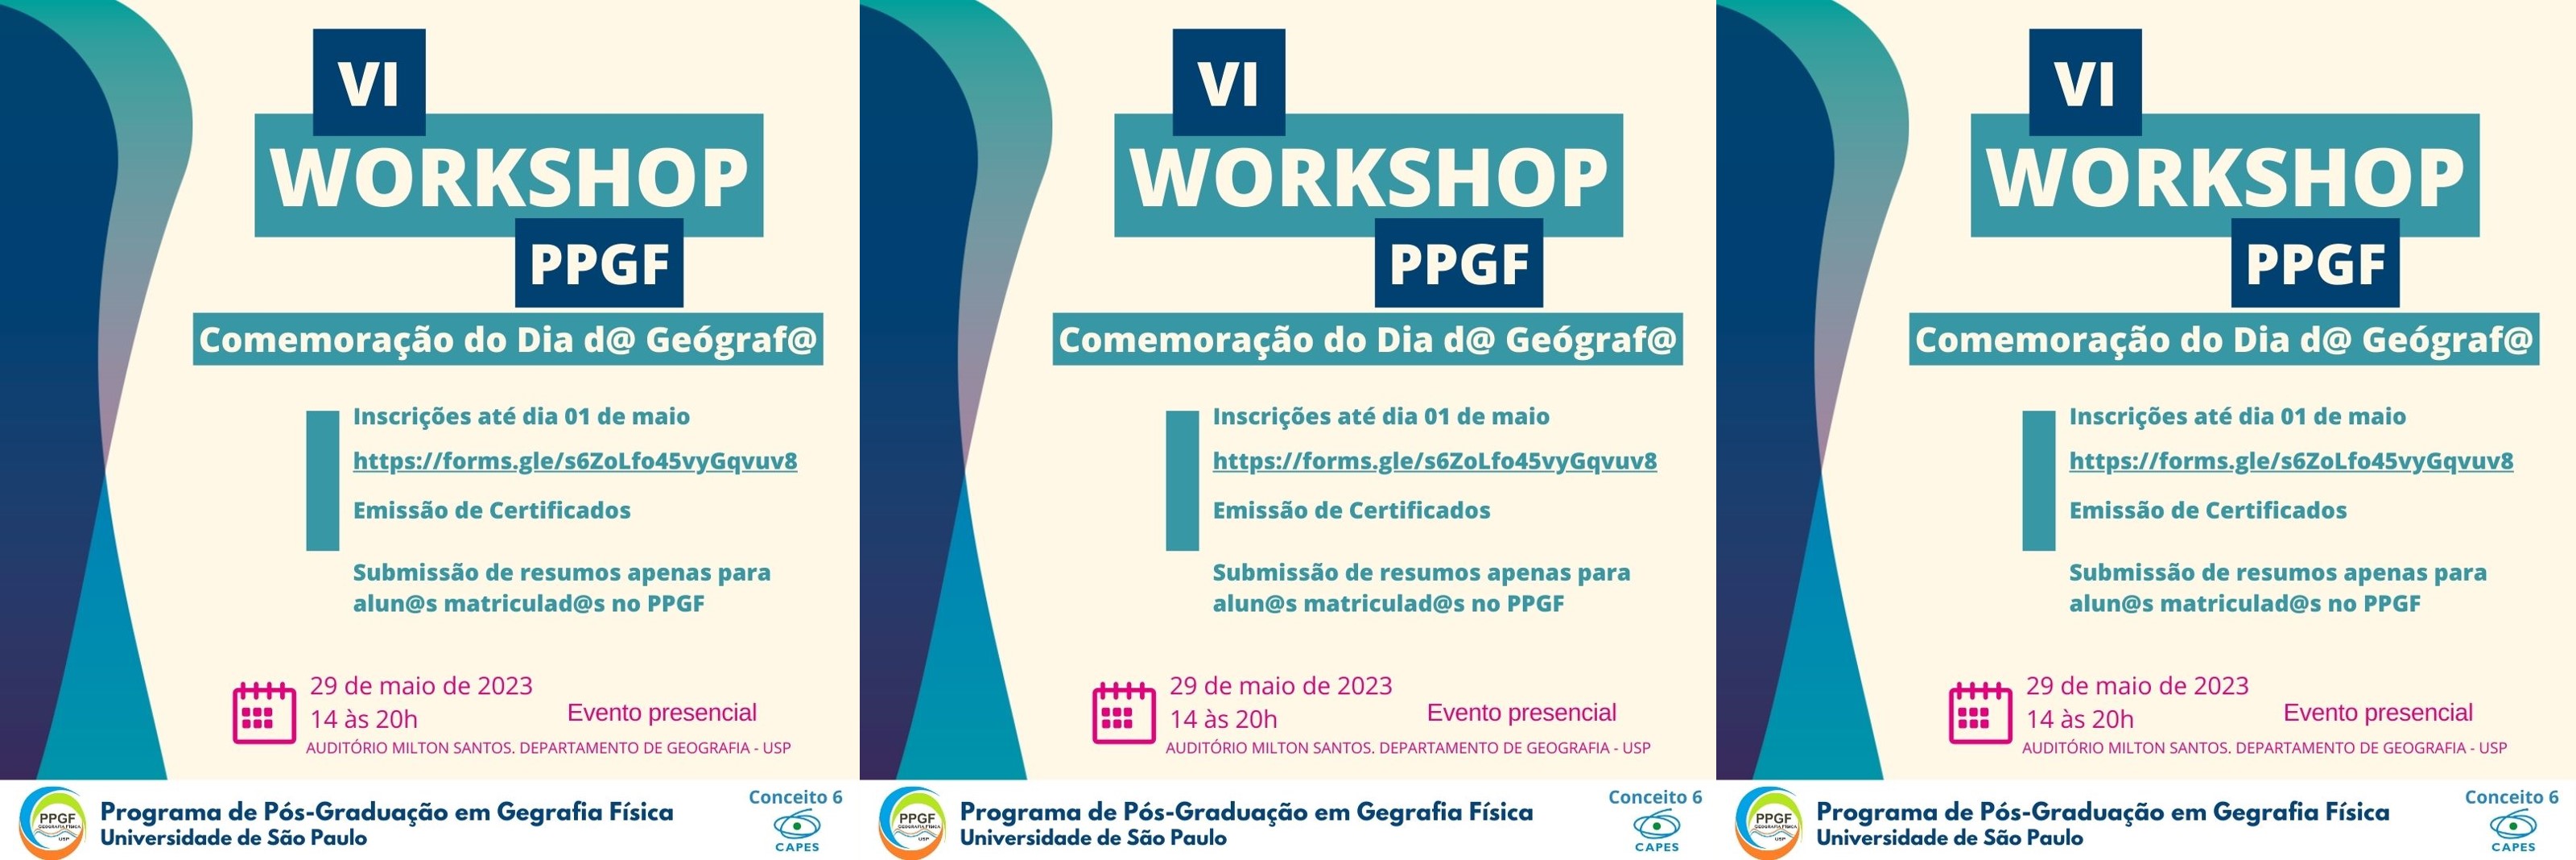 workshop_PPGF_2023_site.jpg